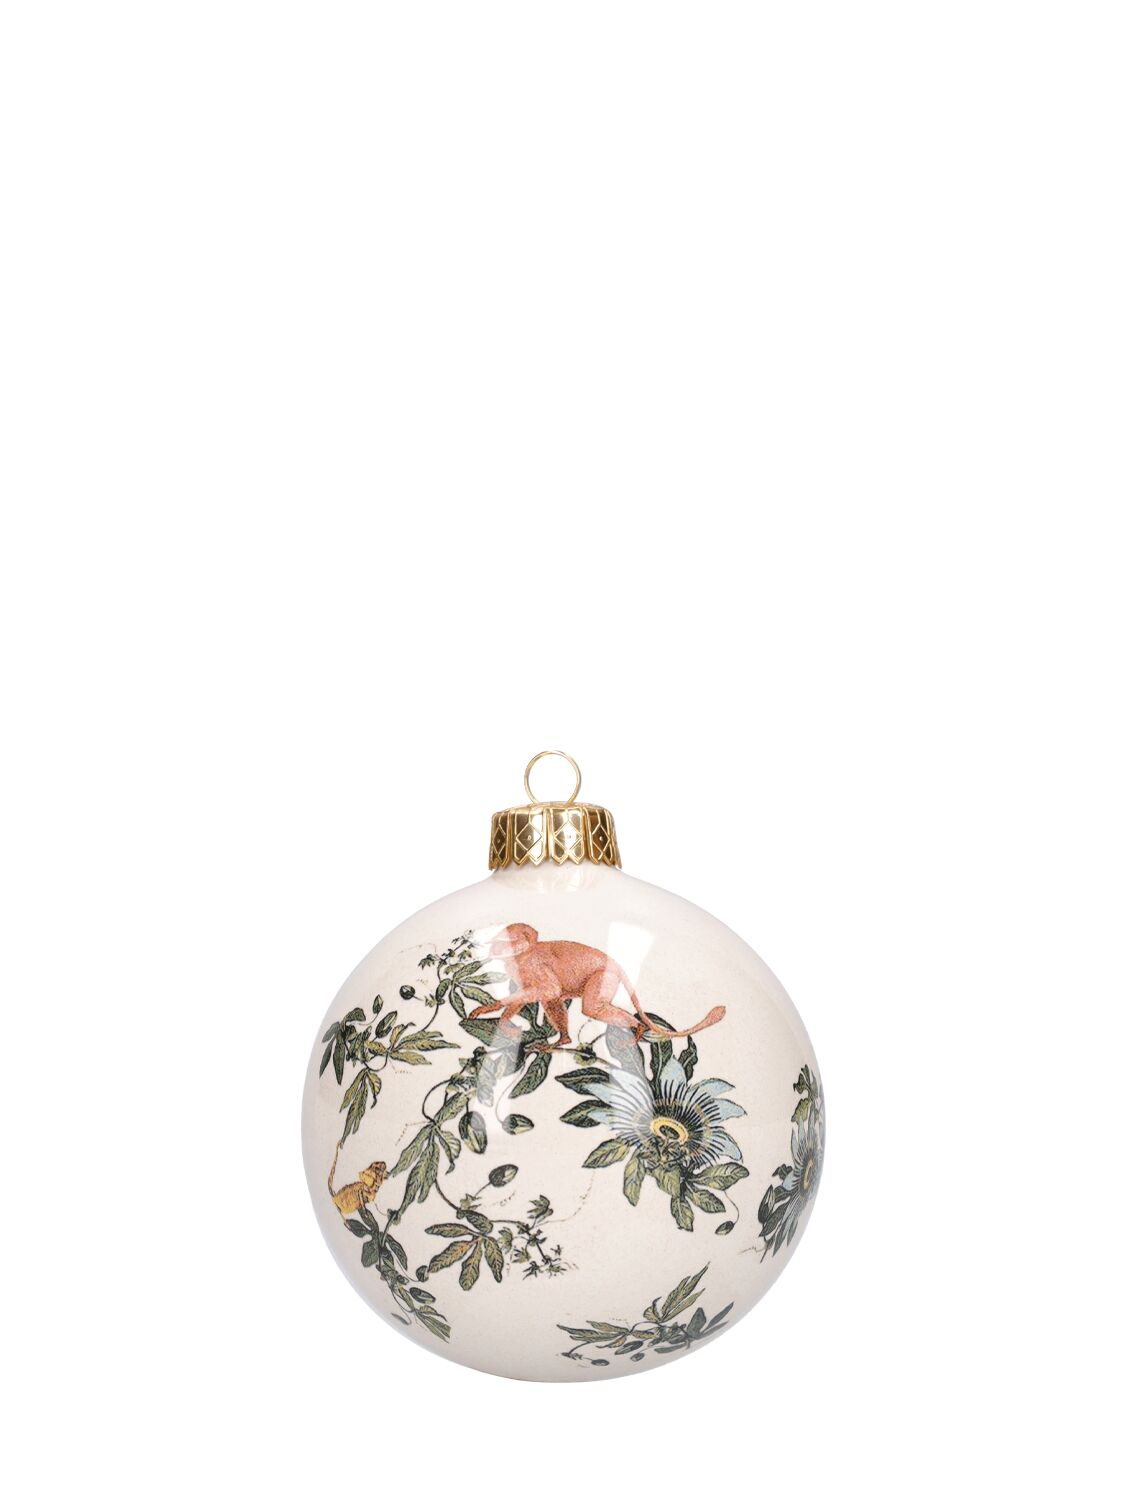 Les Ottomans Porcelain Christmas Ornament In White